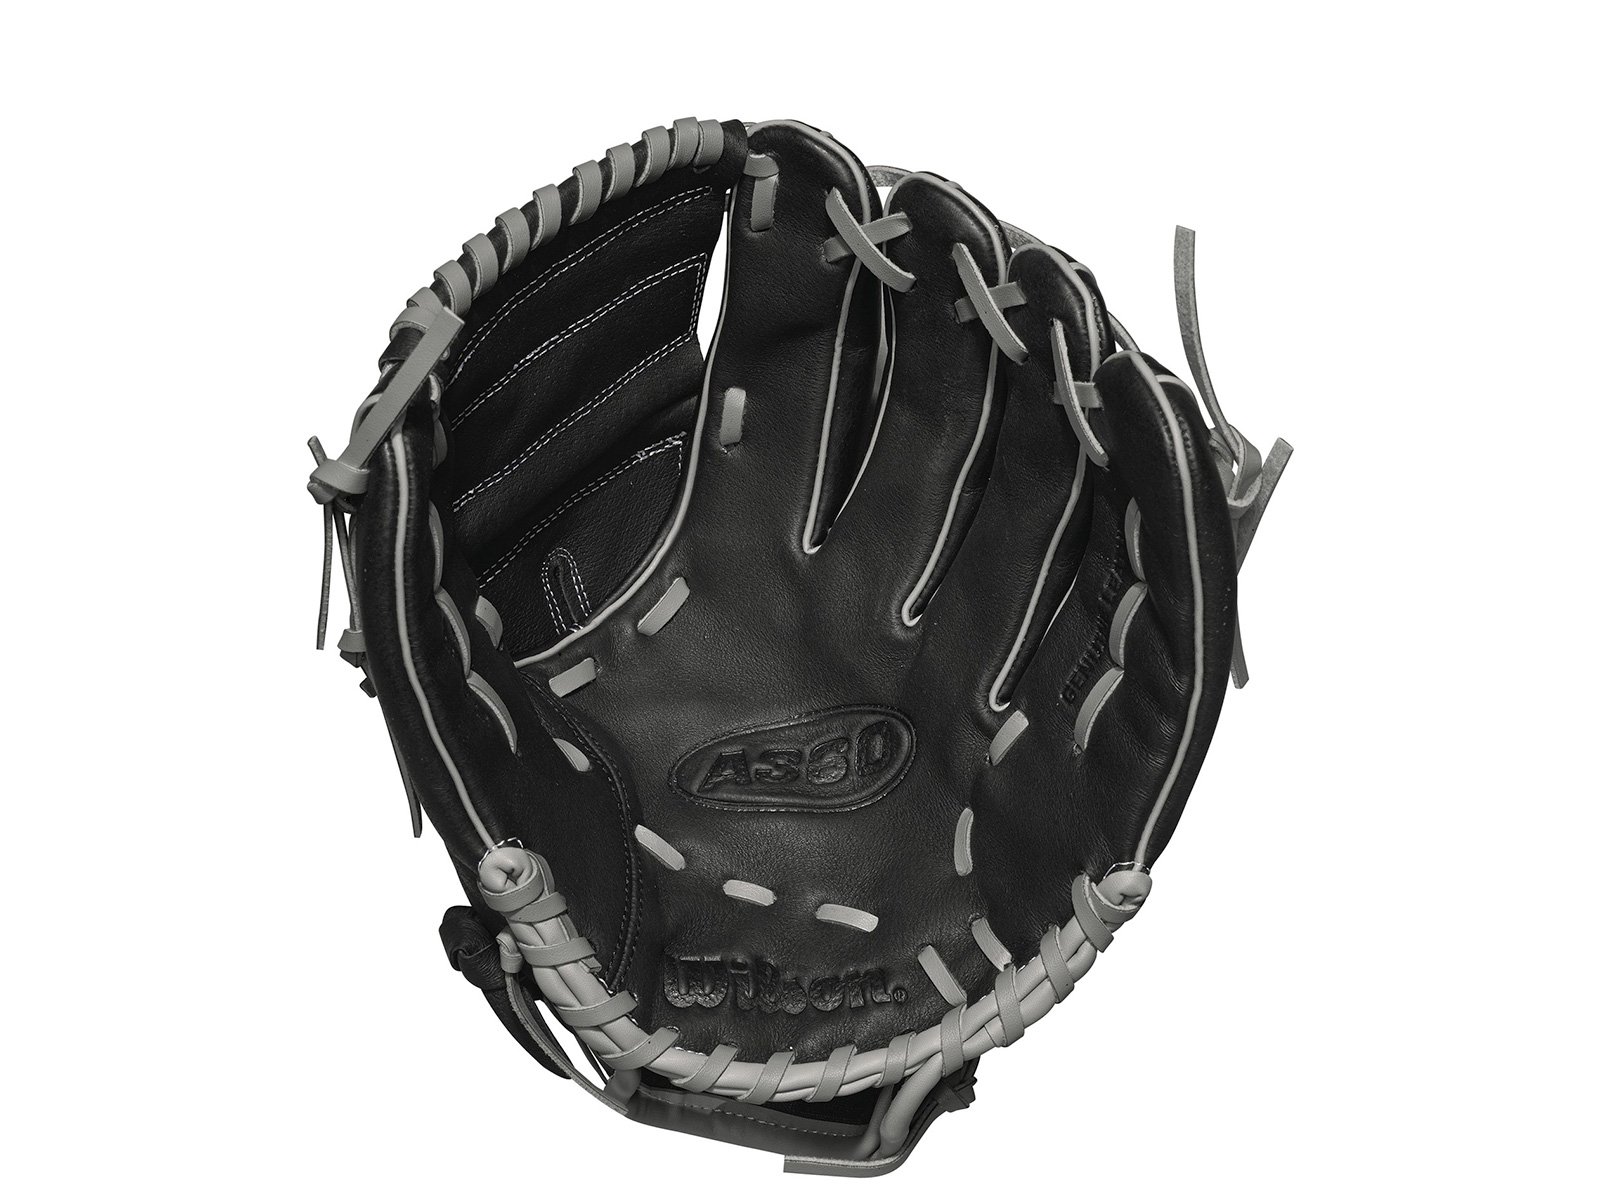 Wilson A360  Series Baseball Gloves Size 12"L